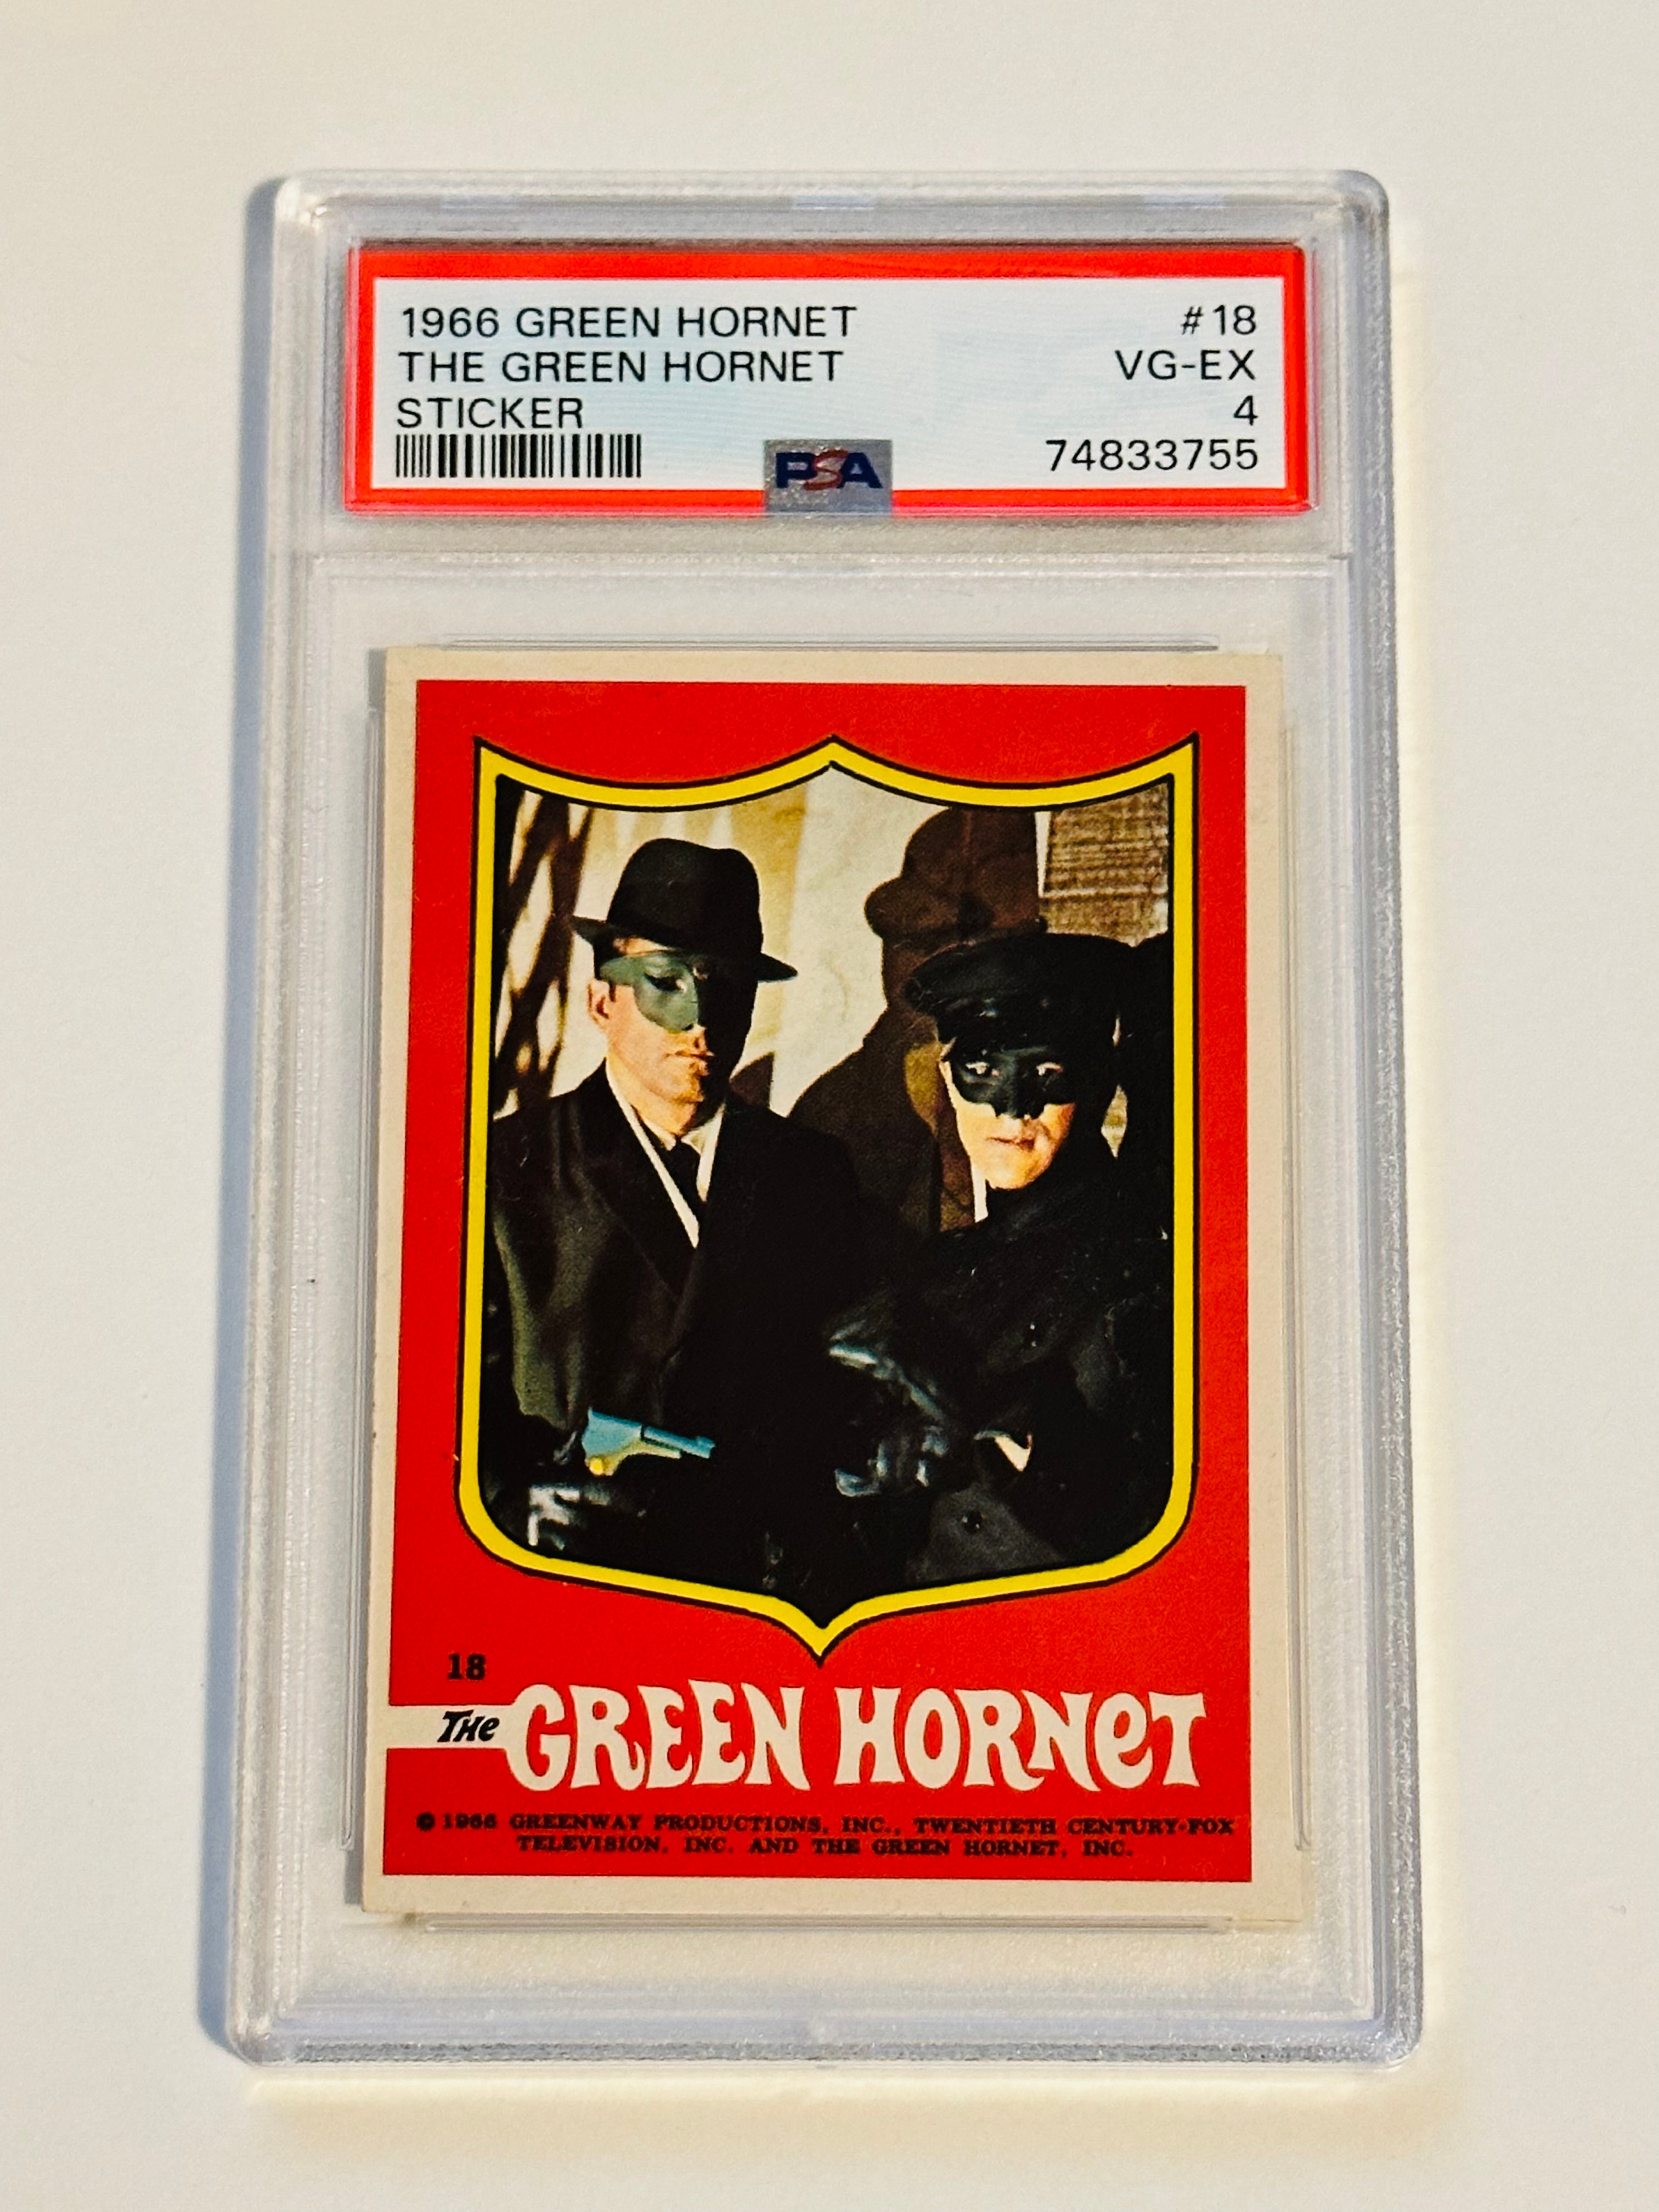 Green Hornet TV show sticker with Bruce Lee PSA graded 1966.